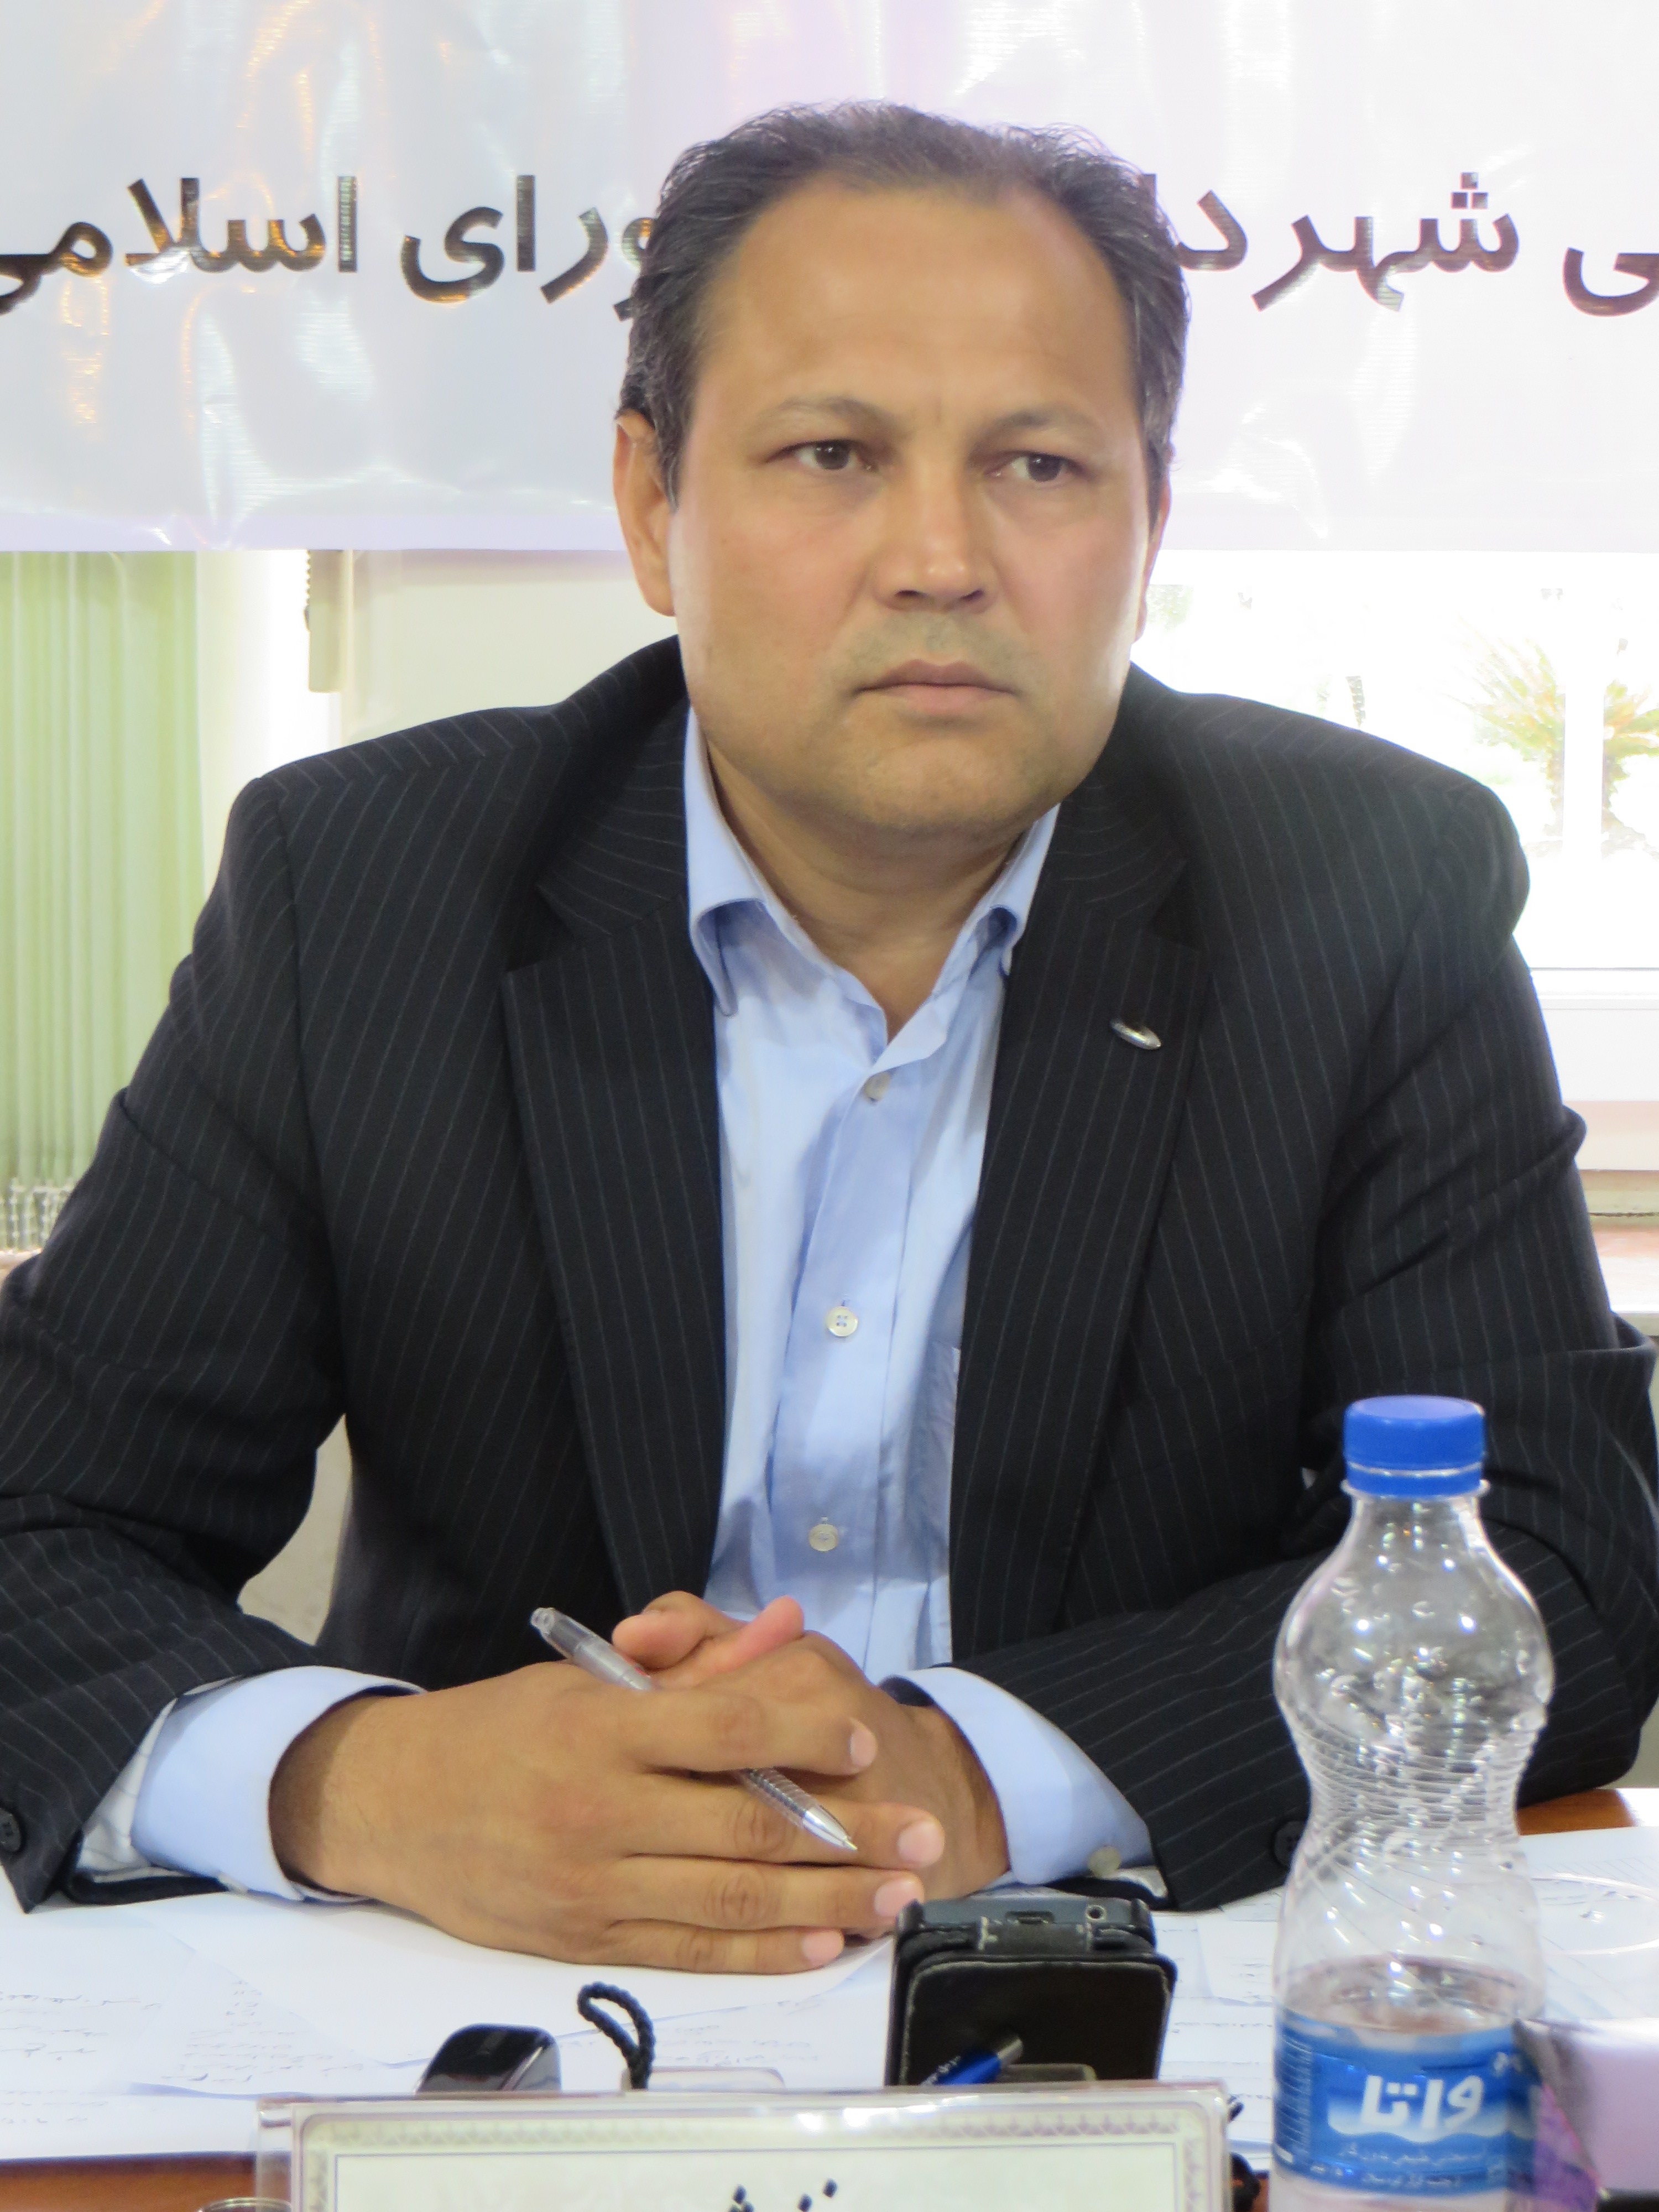 IMG 0648 - رئیس شورای اسلامی شهر گنبد از برگزاری مسابقات کشتی آلیش به میزبانی تیم کشتی مختومقلی گنبد خبر داد